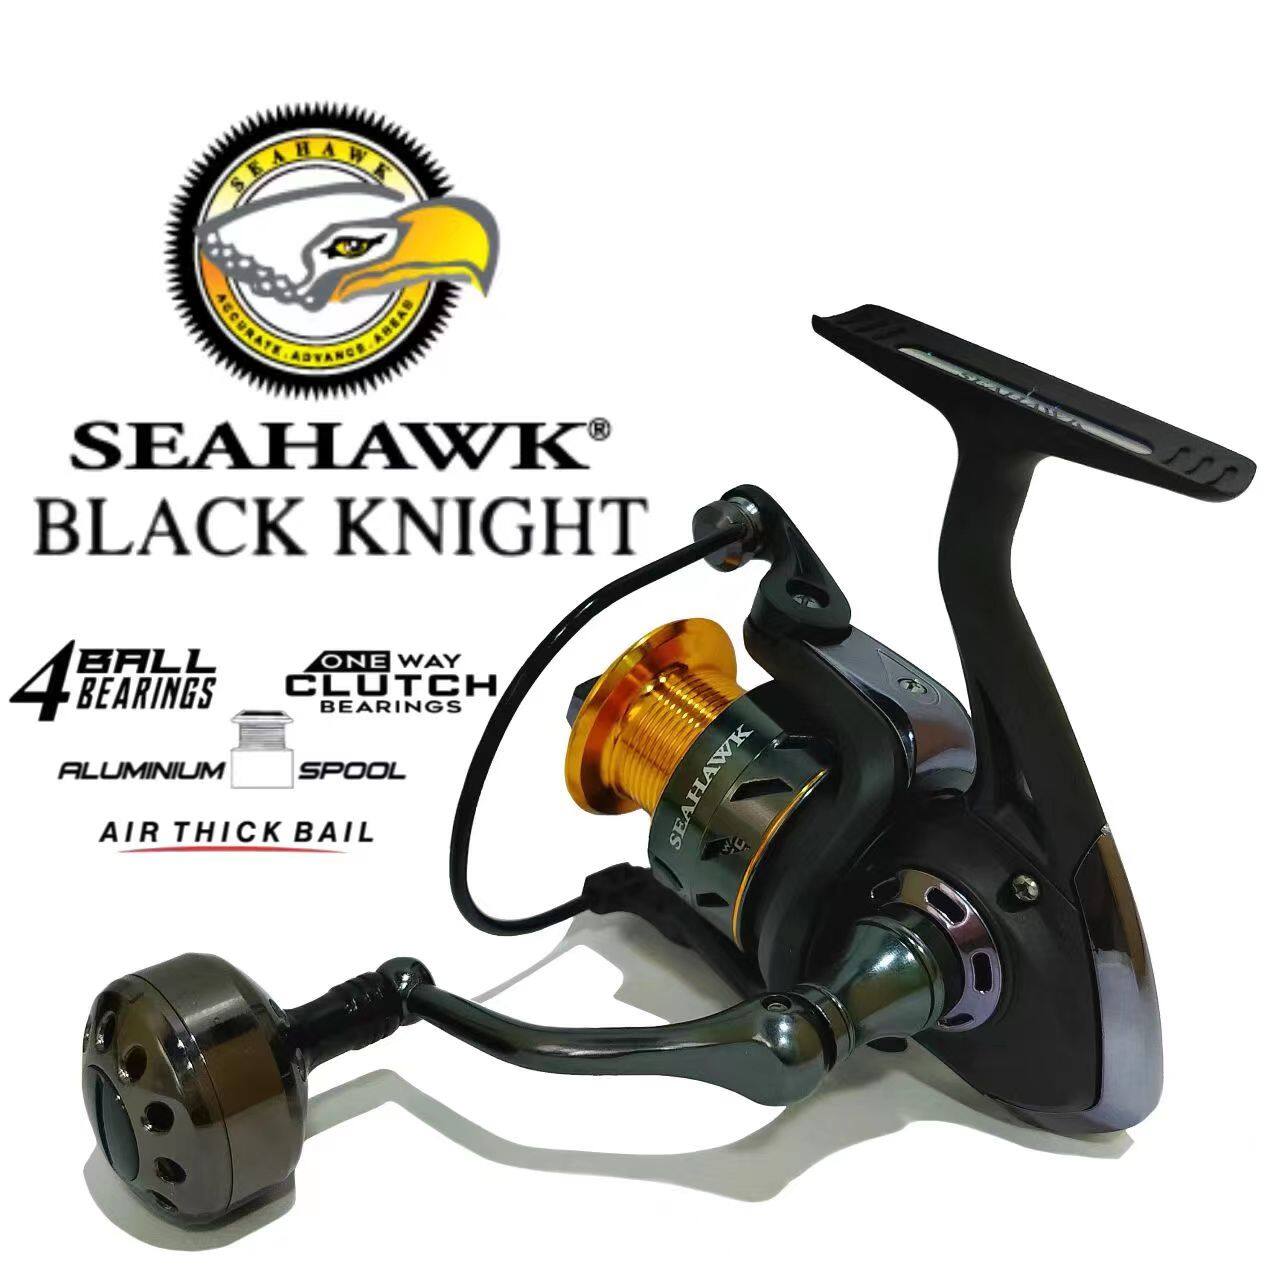 Seahawk reel - Buy Seahawk reel at Best Price in Malaysia